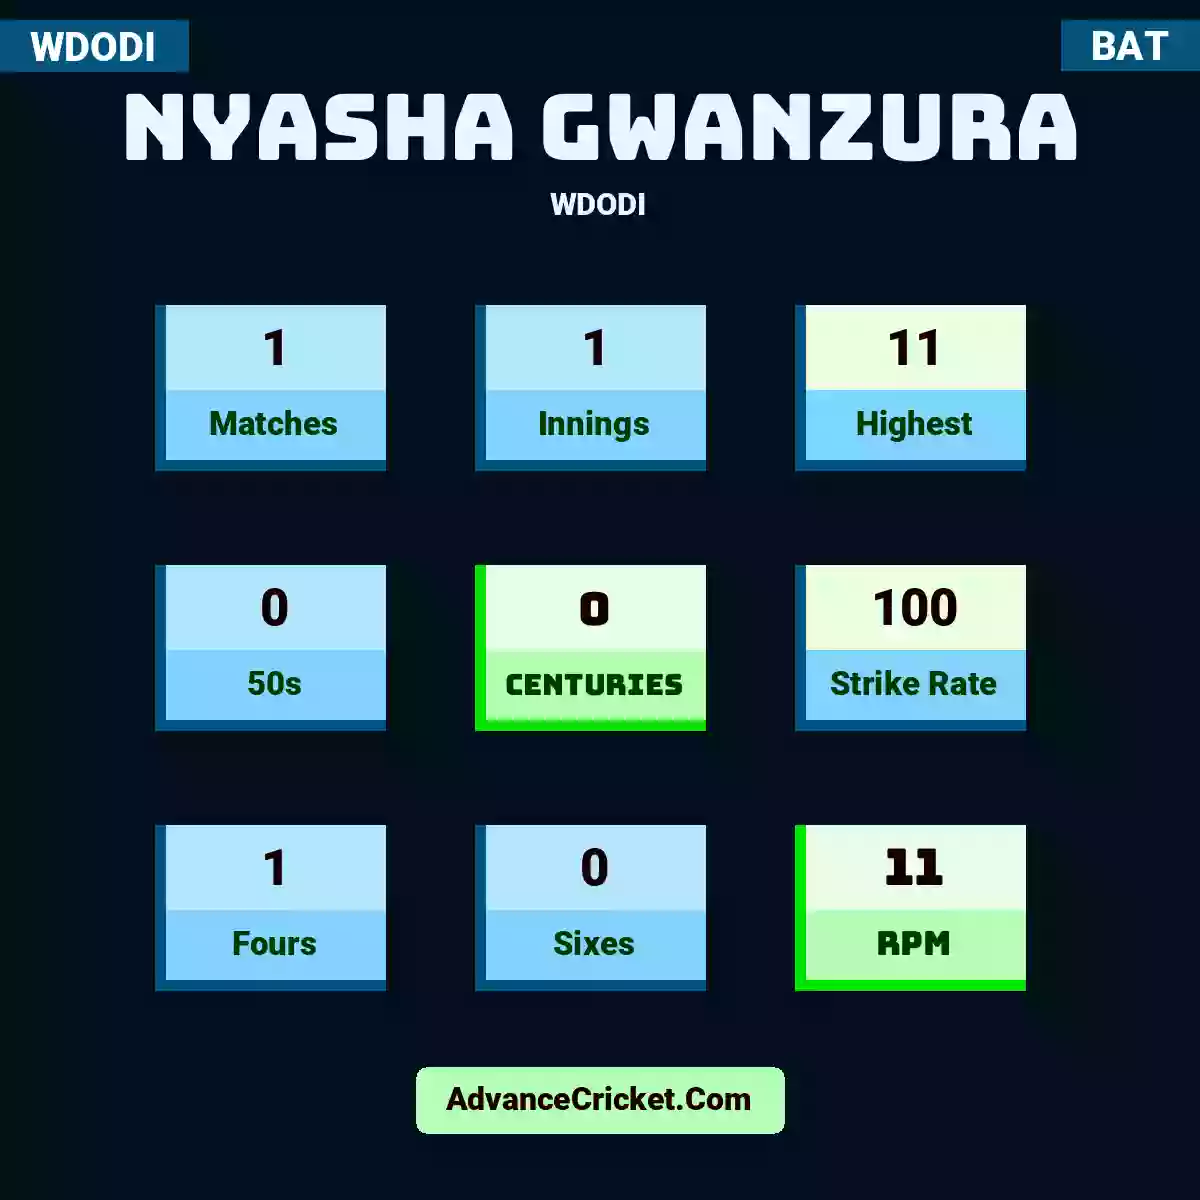 Nyasha Gwanzura WDODI , Nyasha Gwanzura played 1 matches, scored 11 runs as highest, 0 half-centuries, and 0 centuries, with a strike rate of 100. N.Gwanzura hit 1 fours and 0 sixes, with an RPM of 11.